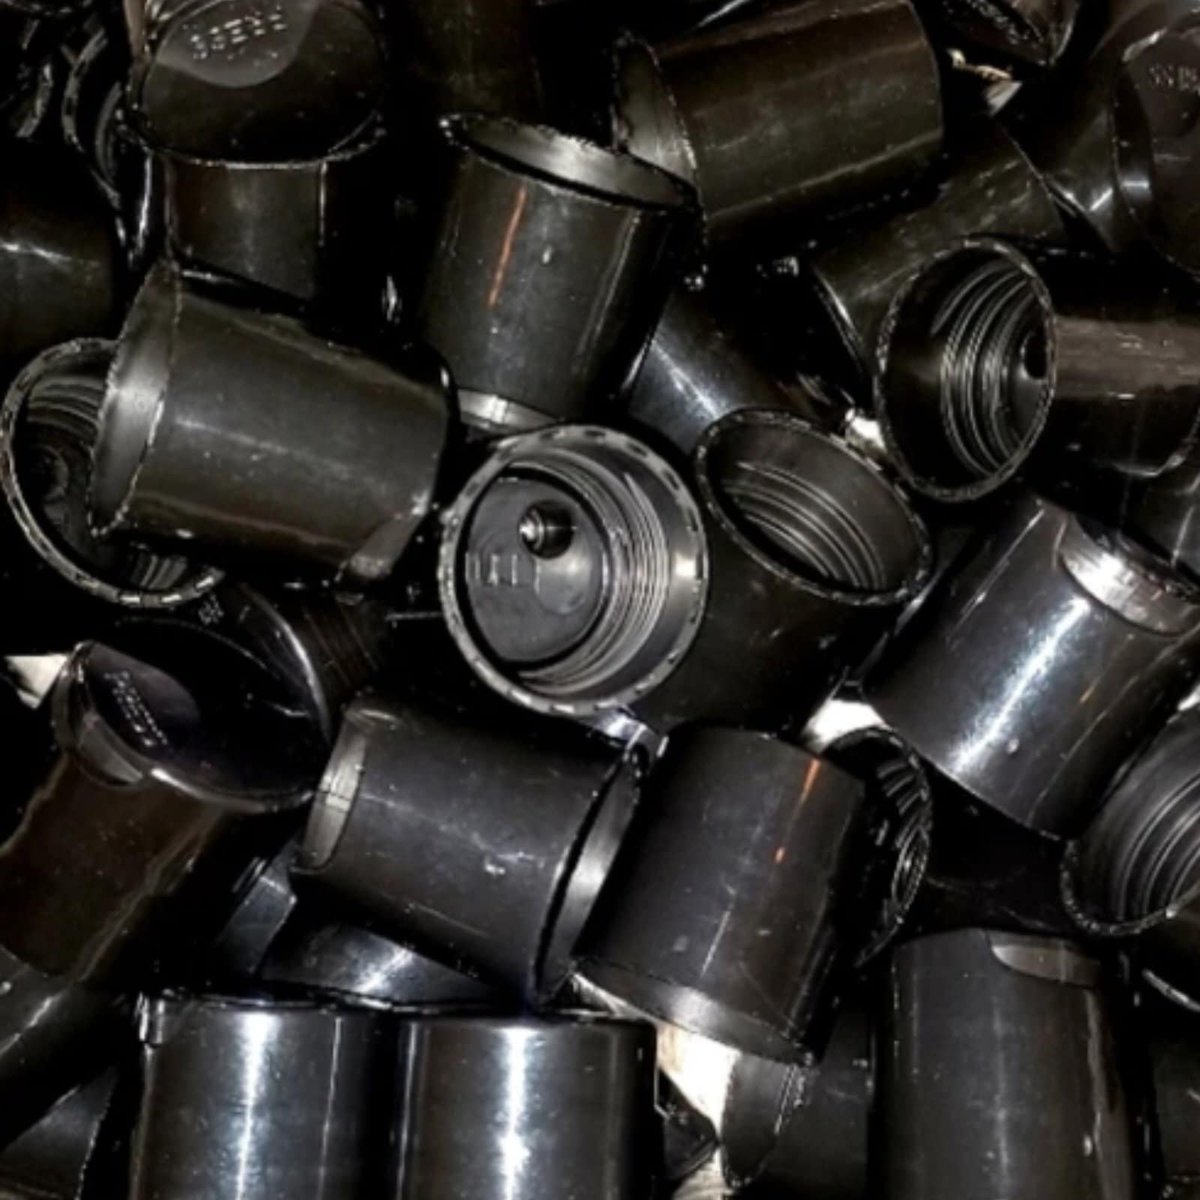 24/410 Black Unlined Dispensing Disc Caps | Quantity Per Package: 125 tuppu.net/de5f945d #handmadecandles #aromatheraphy #candleoils #explorepage #glitter #candlemaker #Warehouse1711 #dtftransfers #24410DiscCaps